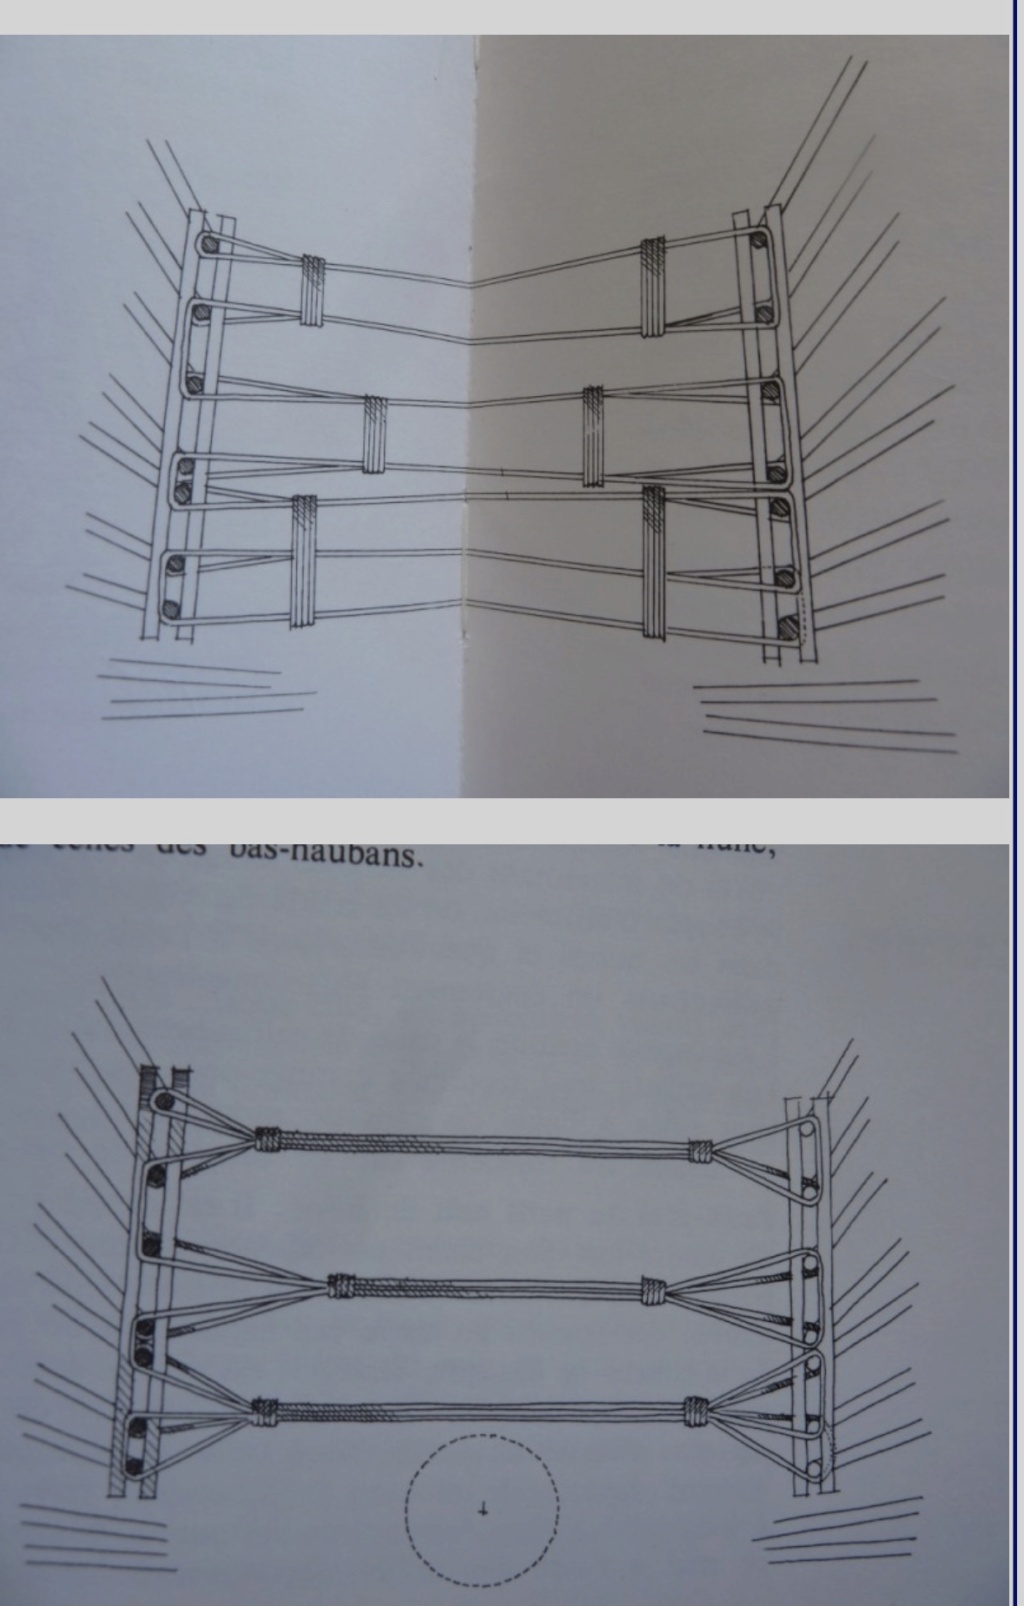 Bonhomme Richard : 2) Gréement [ZHL Model 1/48°] de Pierre Malardier - Page 5 Cfcdf710